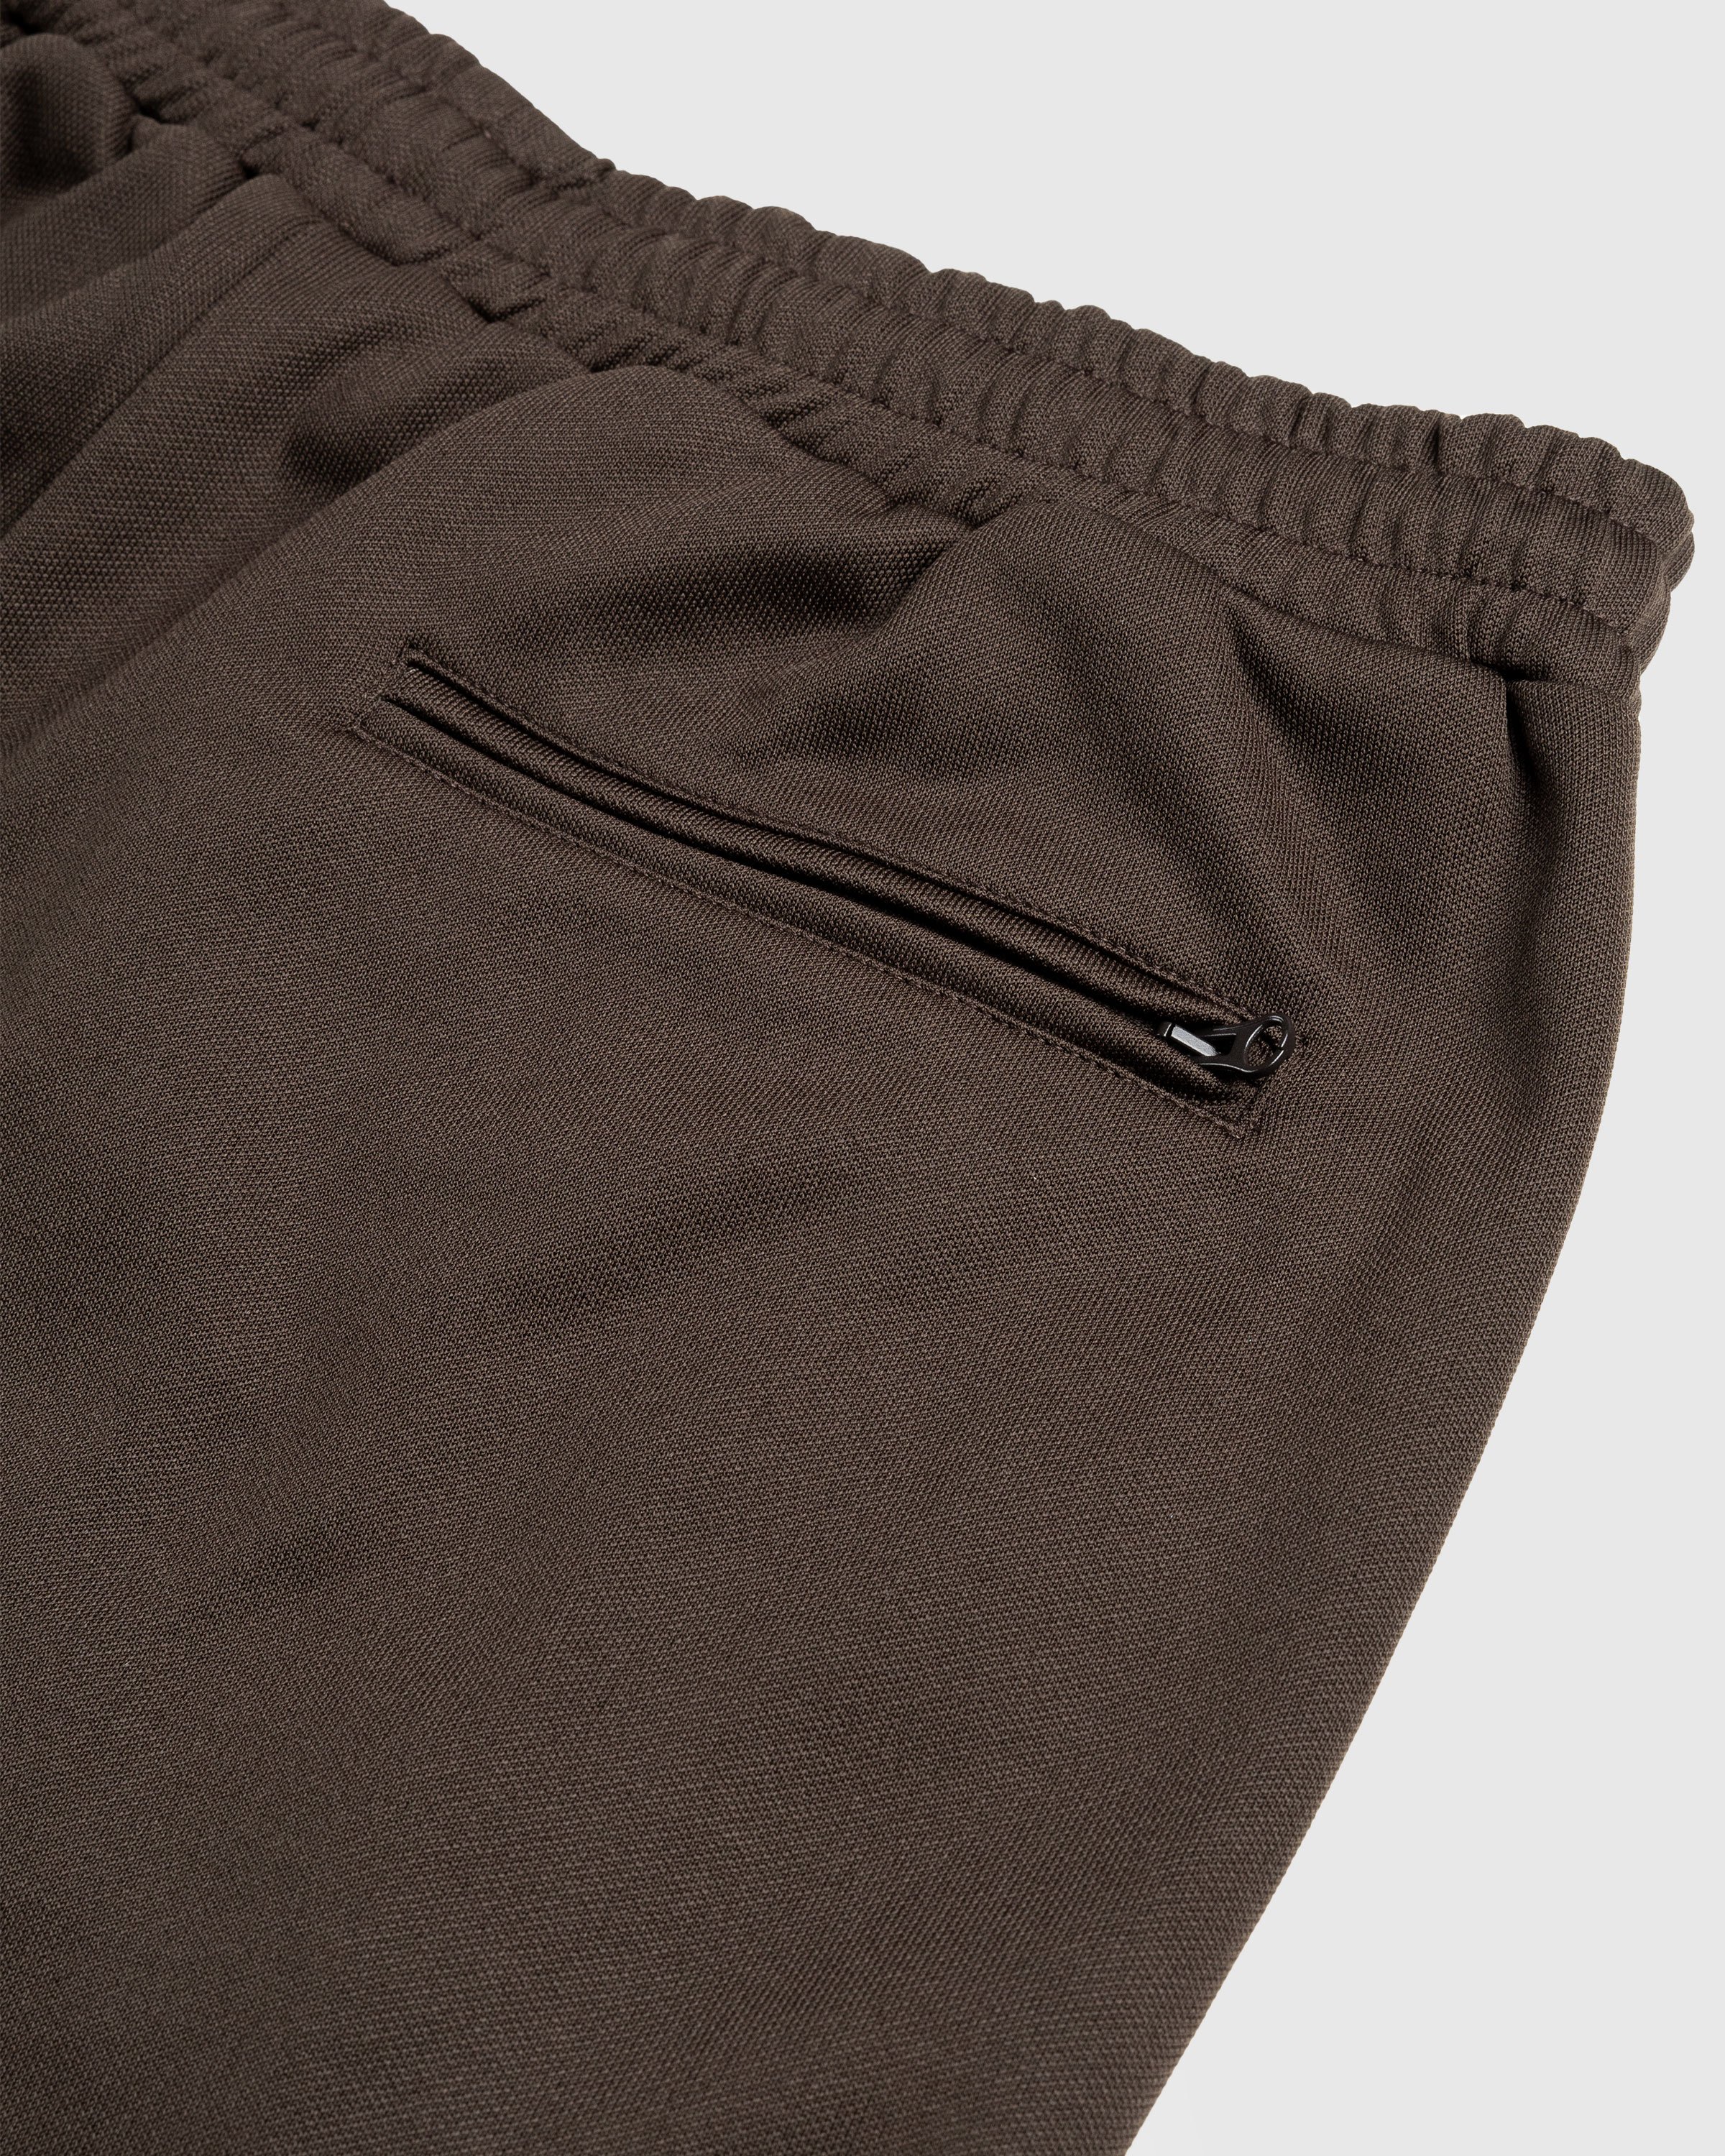 Reebok - Piped Track Pants Moro - Clothing - Brown - Image 7